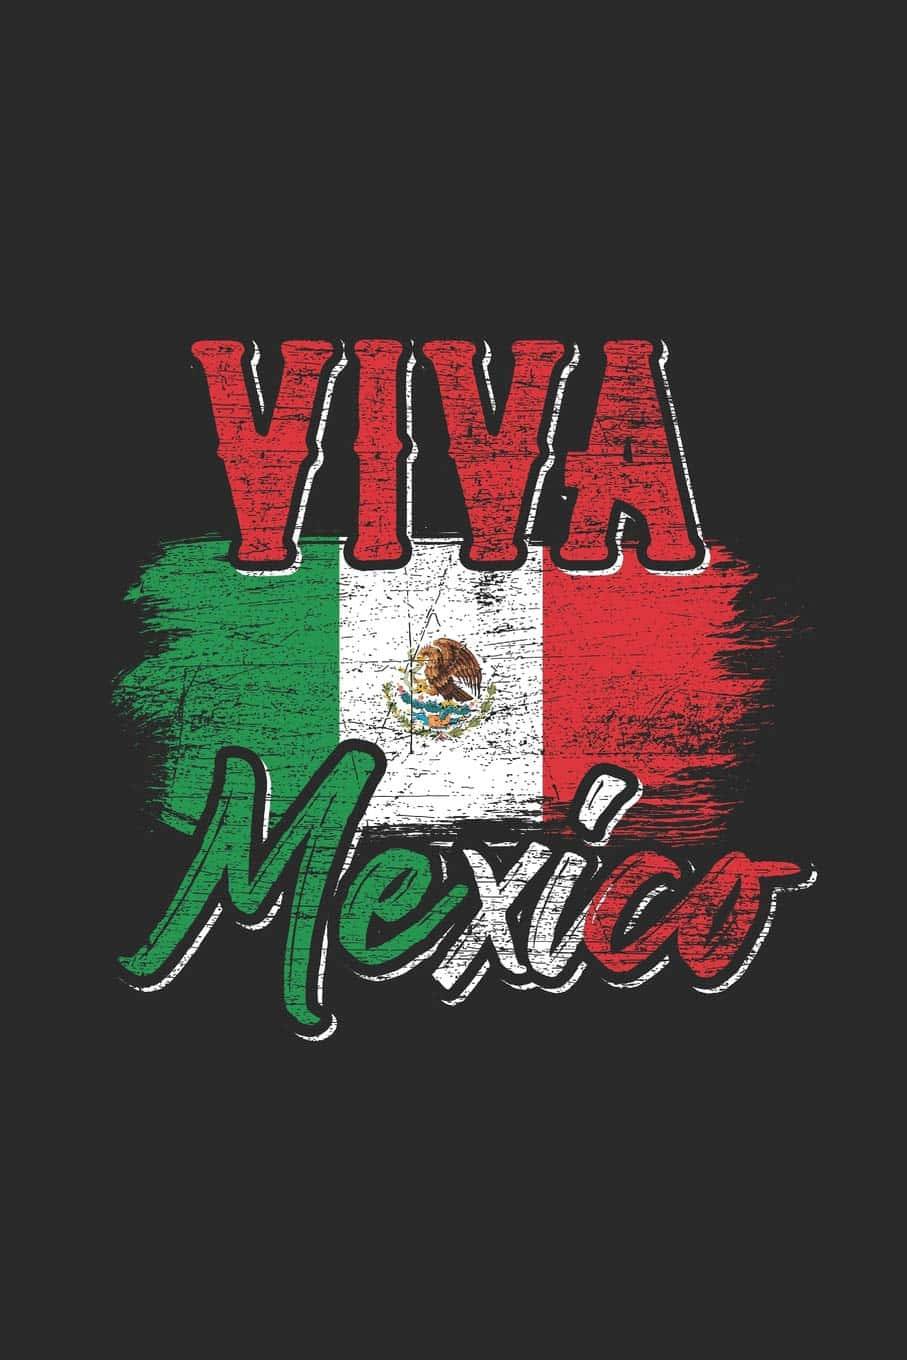 Explore The Vibrant Colors And Culture Of Viva Mexico!